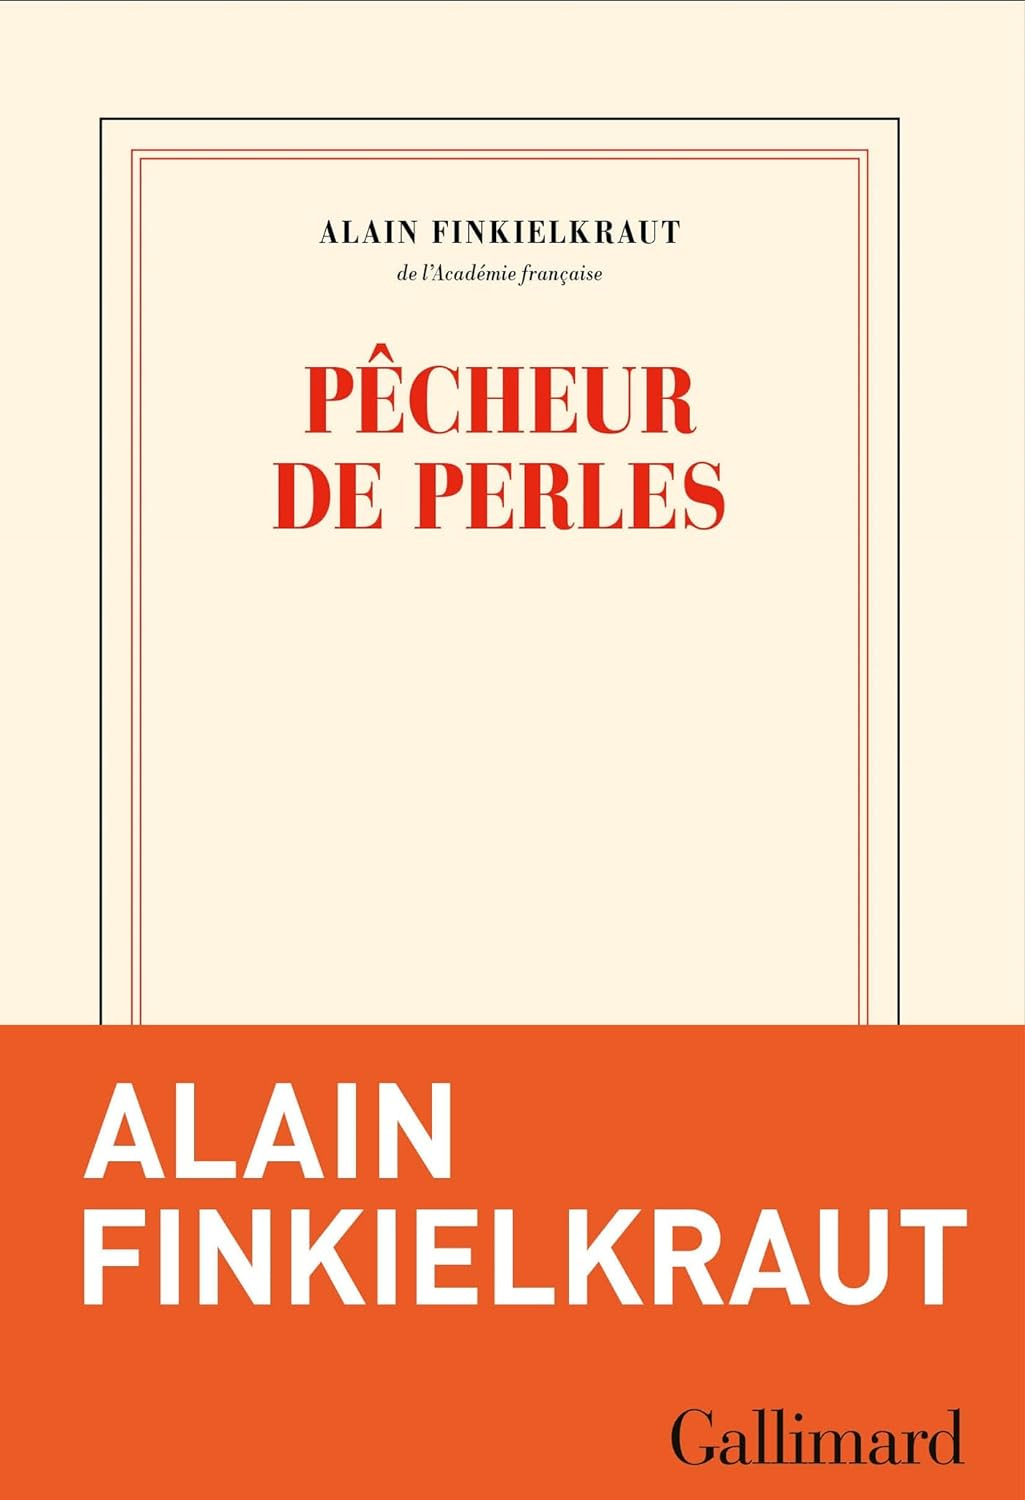 https://www.amazon.fr/P%C3%AAcheur-perles-Alain-Finkielkraut/dp/2073048986